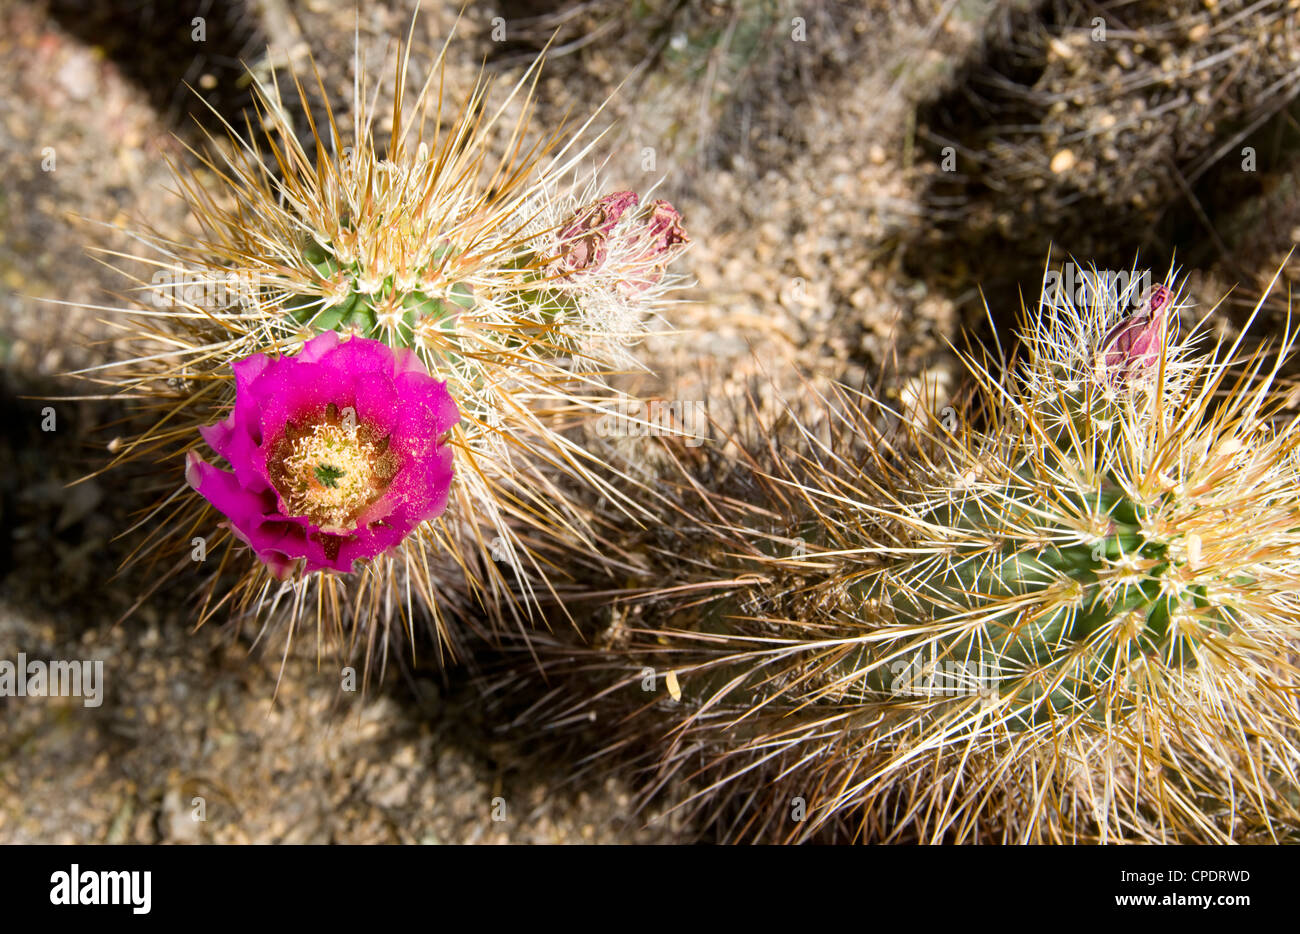 A flowering cactus close up Stock Photo